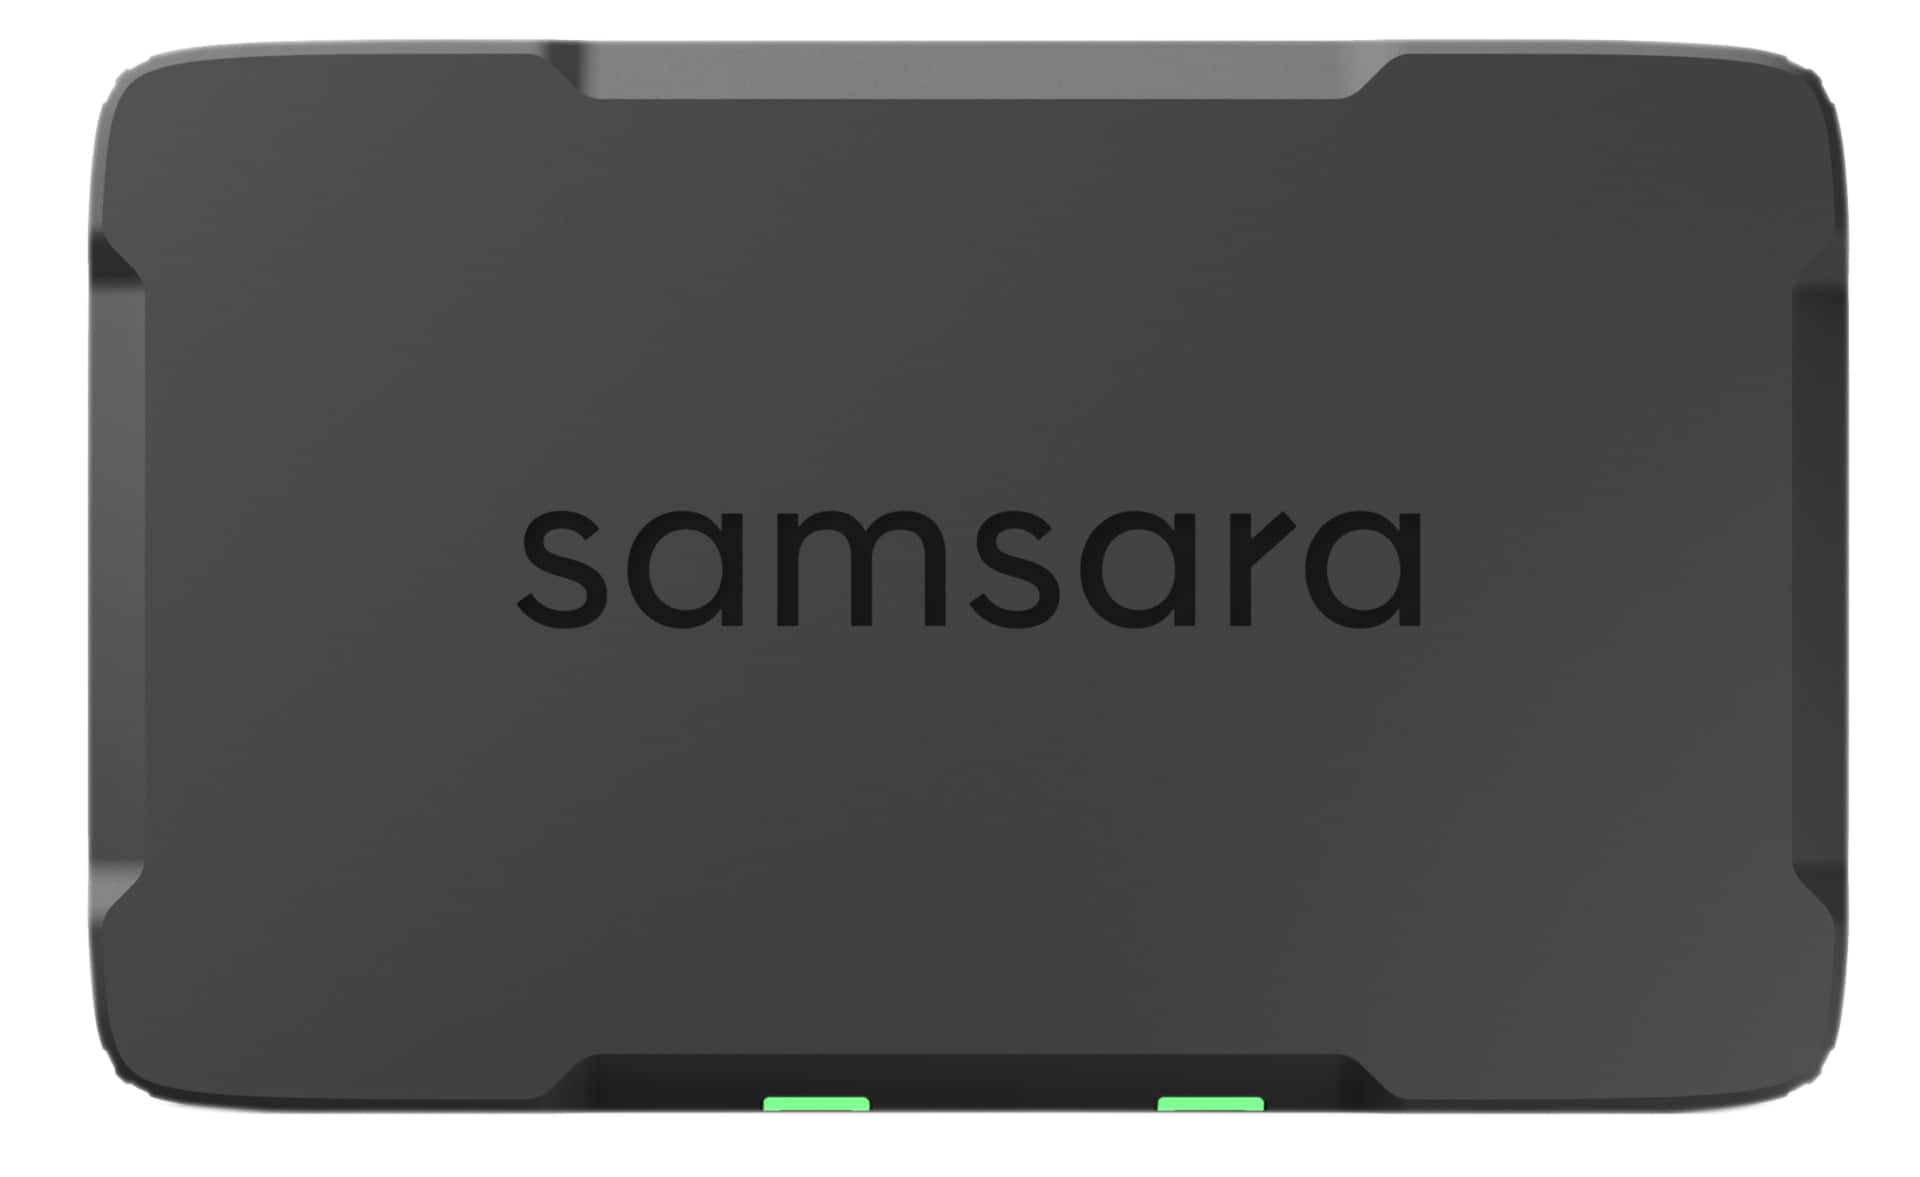 Samsara VG34 Vehicle IoT Gateway